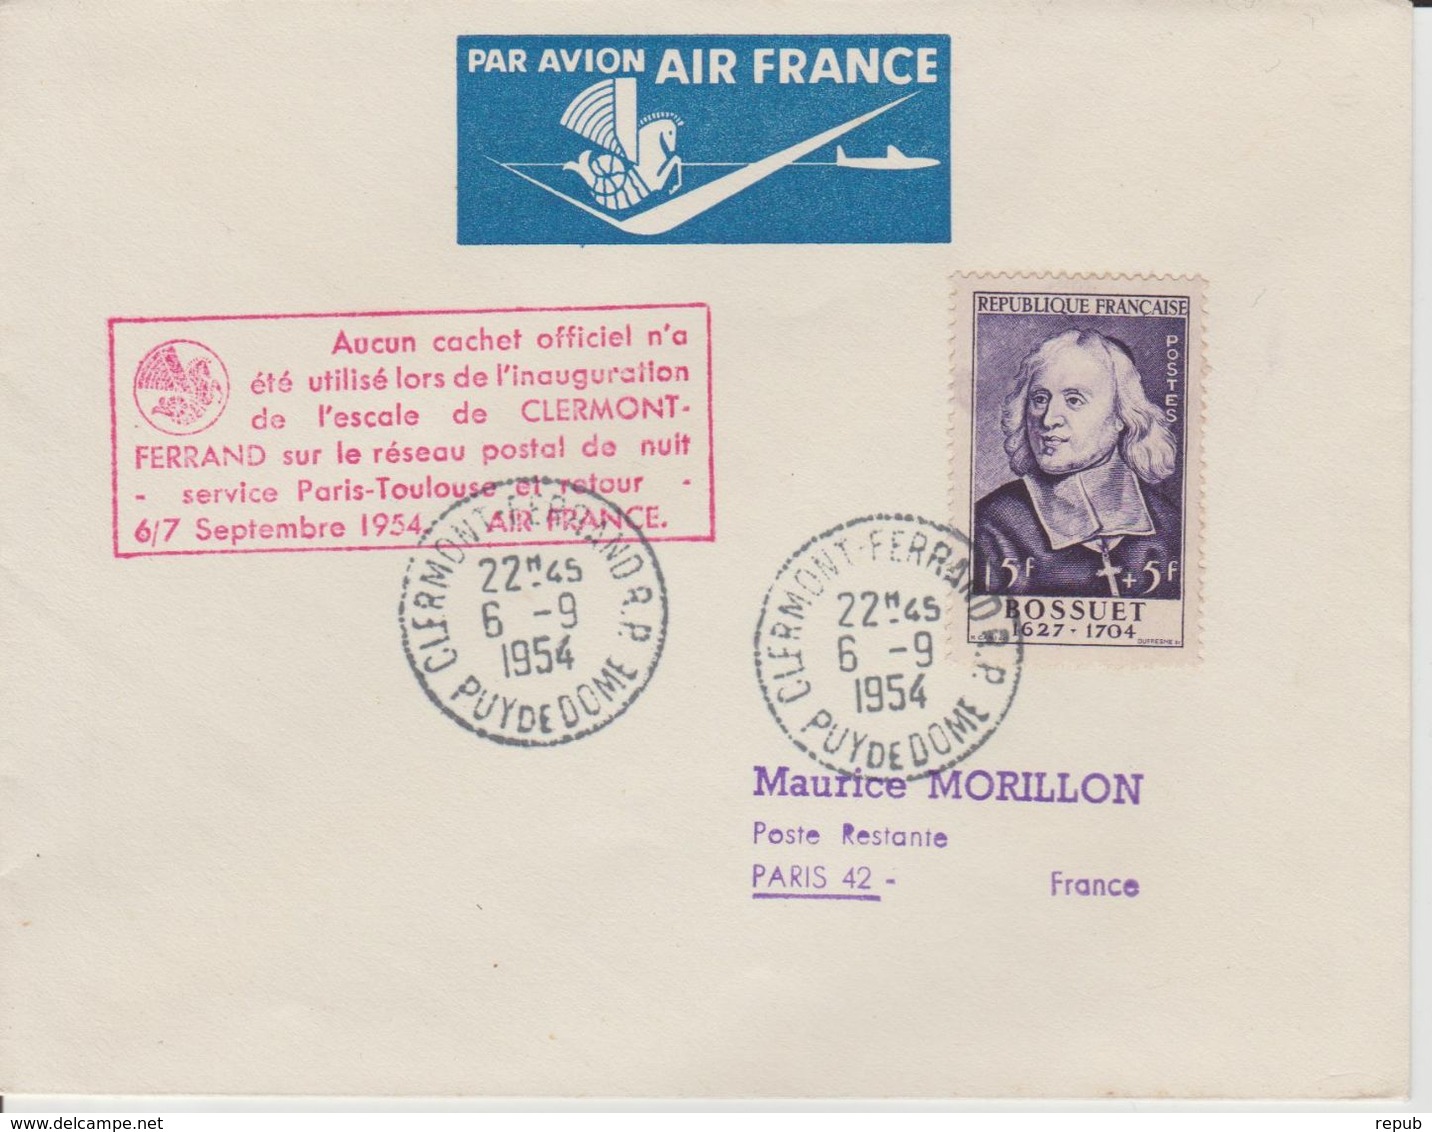 France 1954 Escale Clermont Ferrand Service Paris-Toulouse - First Flight Covers